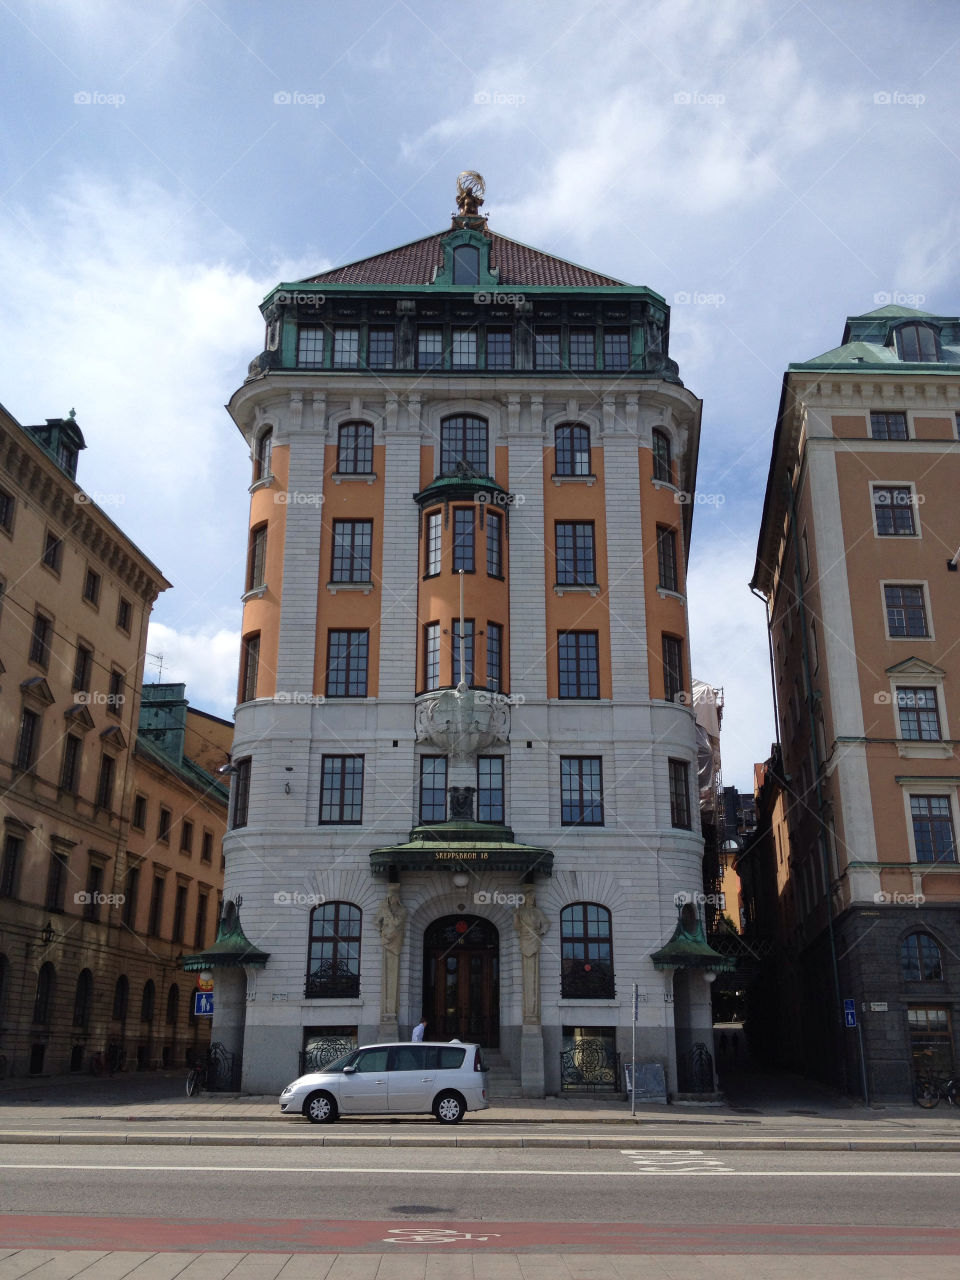 sweden city stockholm house by mikaelnilsson